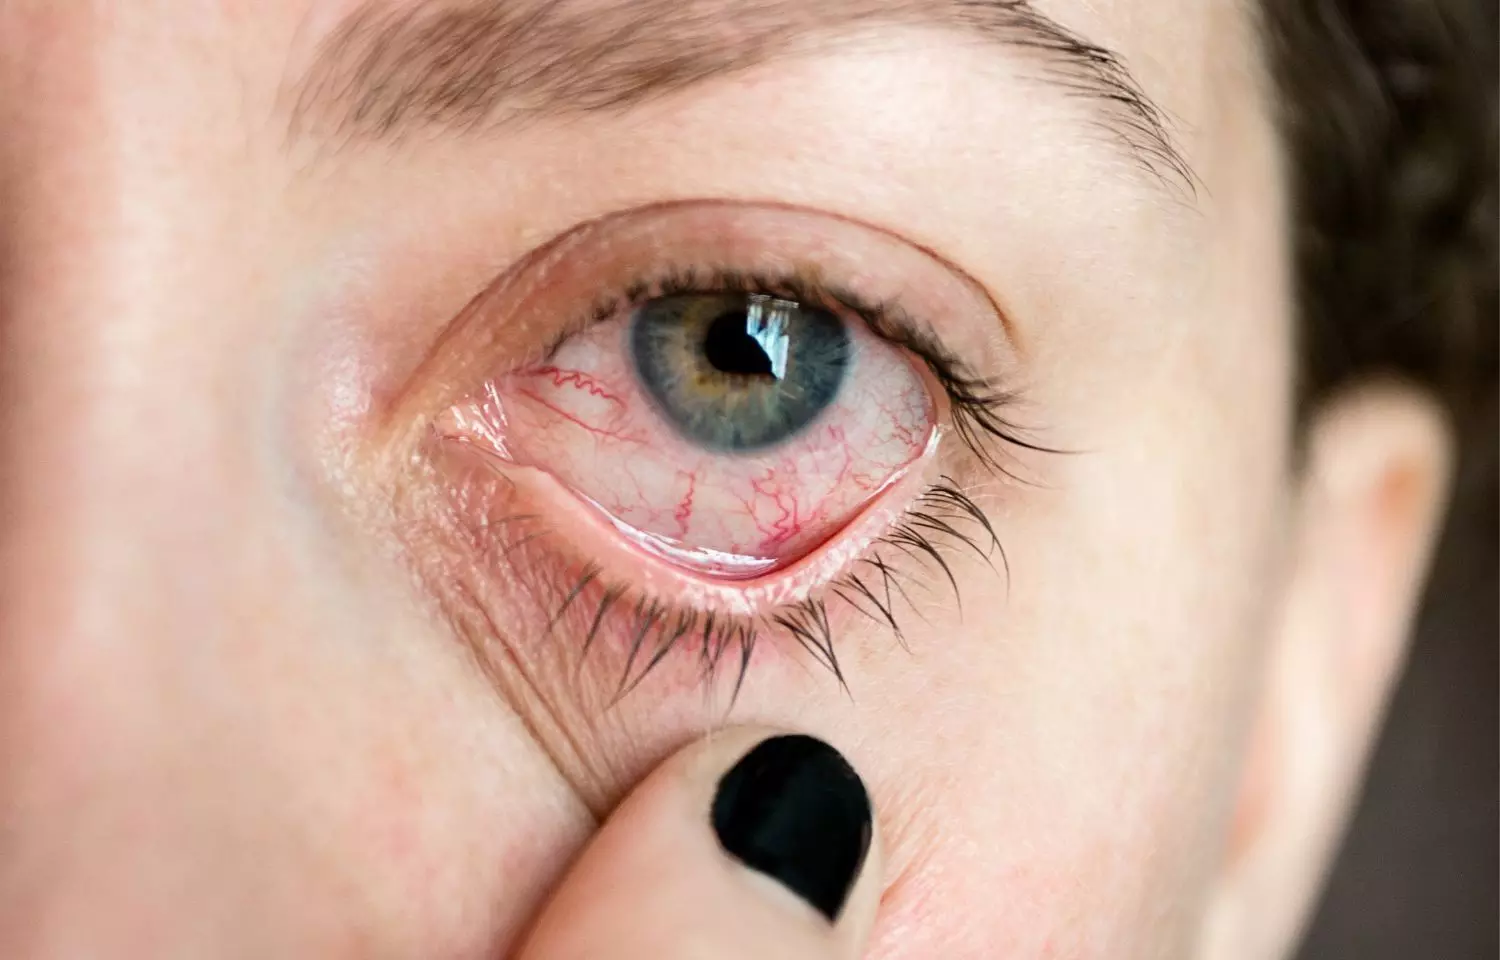 Non-segmental vitiligo closely related to ocular problems: Study